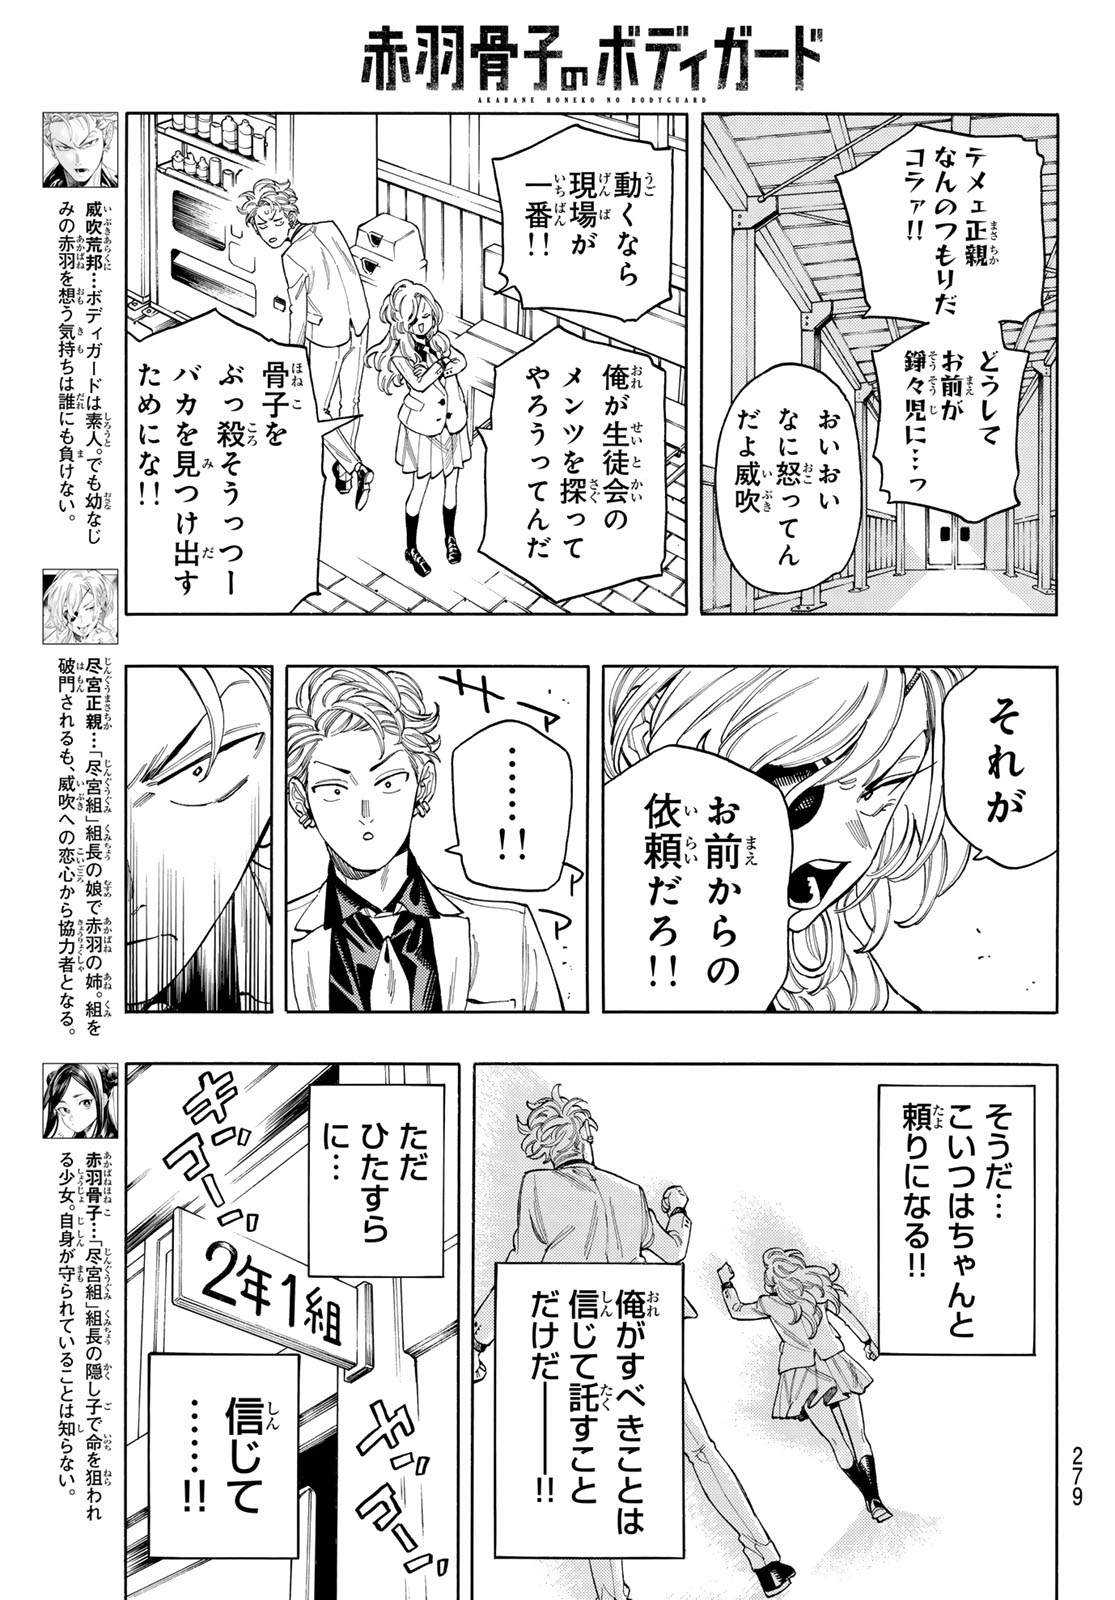 Akabane Honeko no Bodyguard - Chapter 77 - Page 3